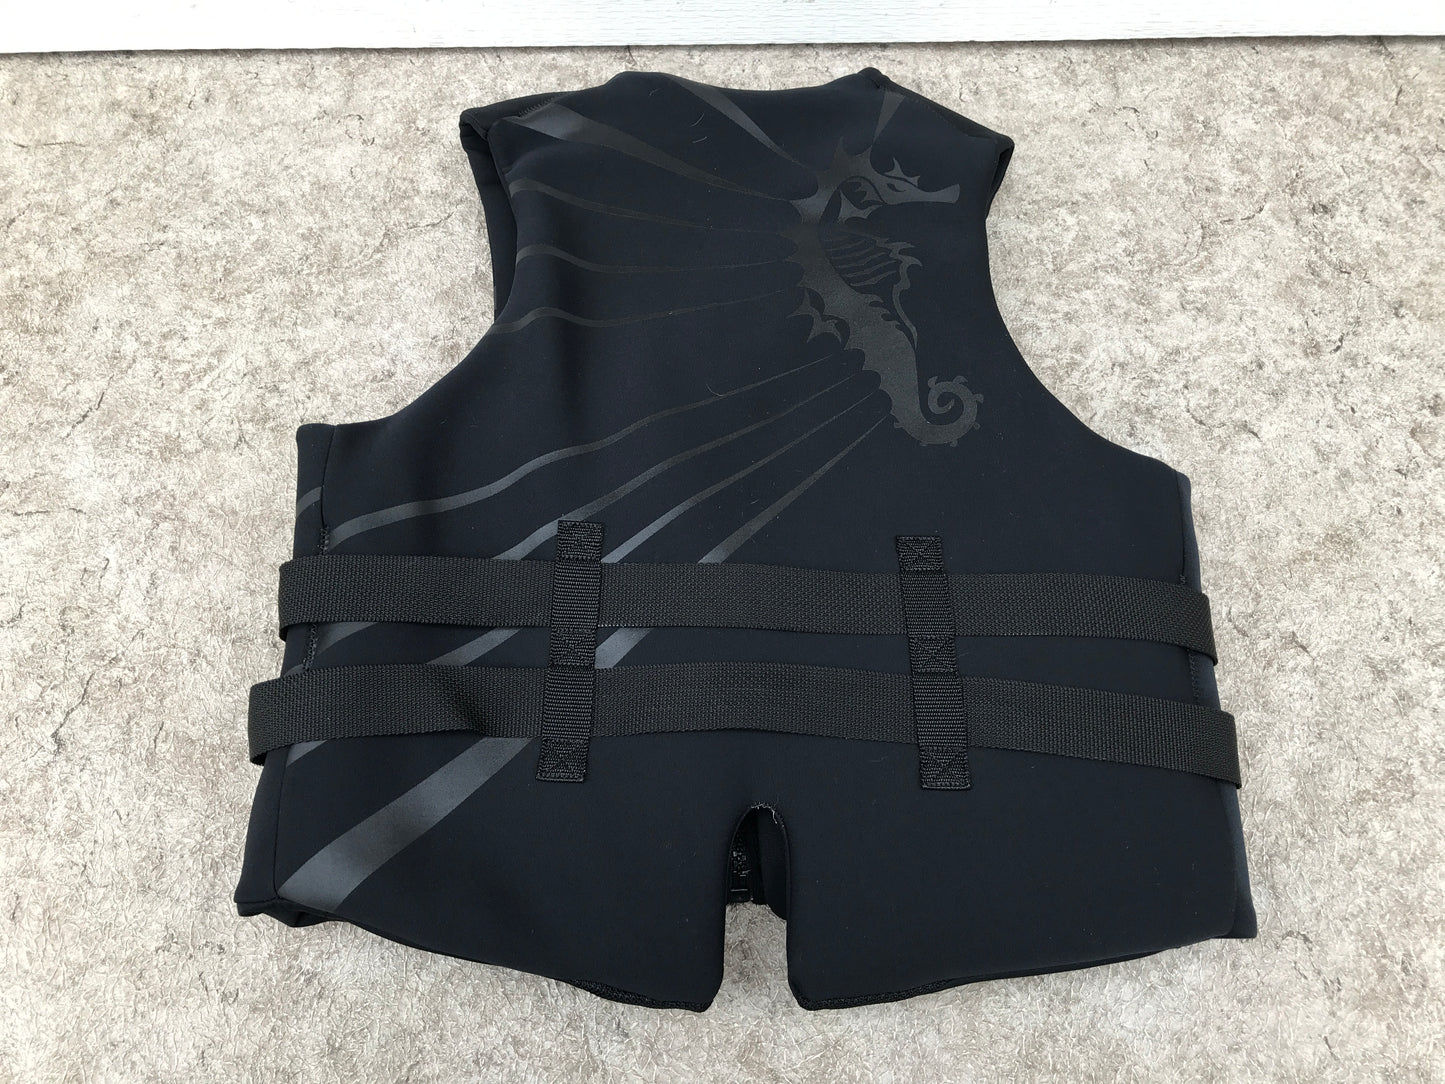 Life jacket vest adult size XXLarge mustang survival black neoprene transport Canada approved